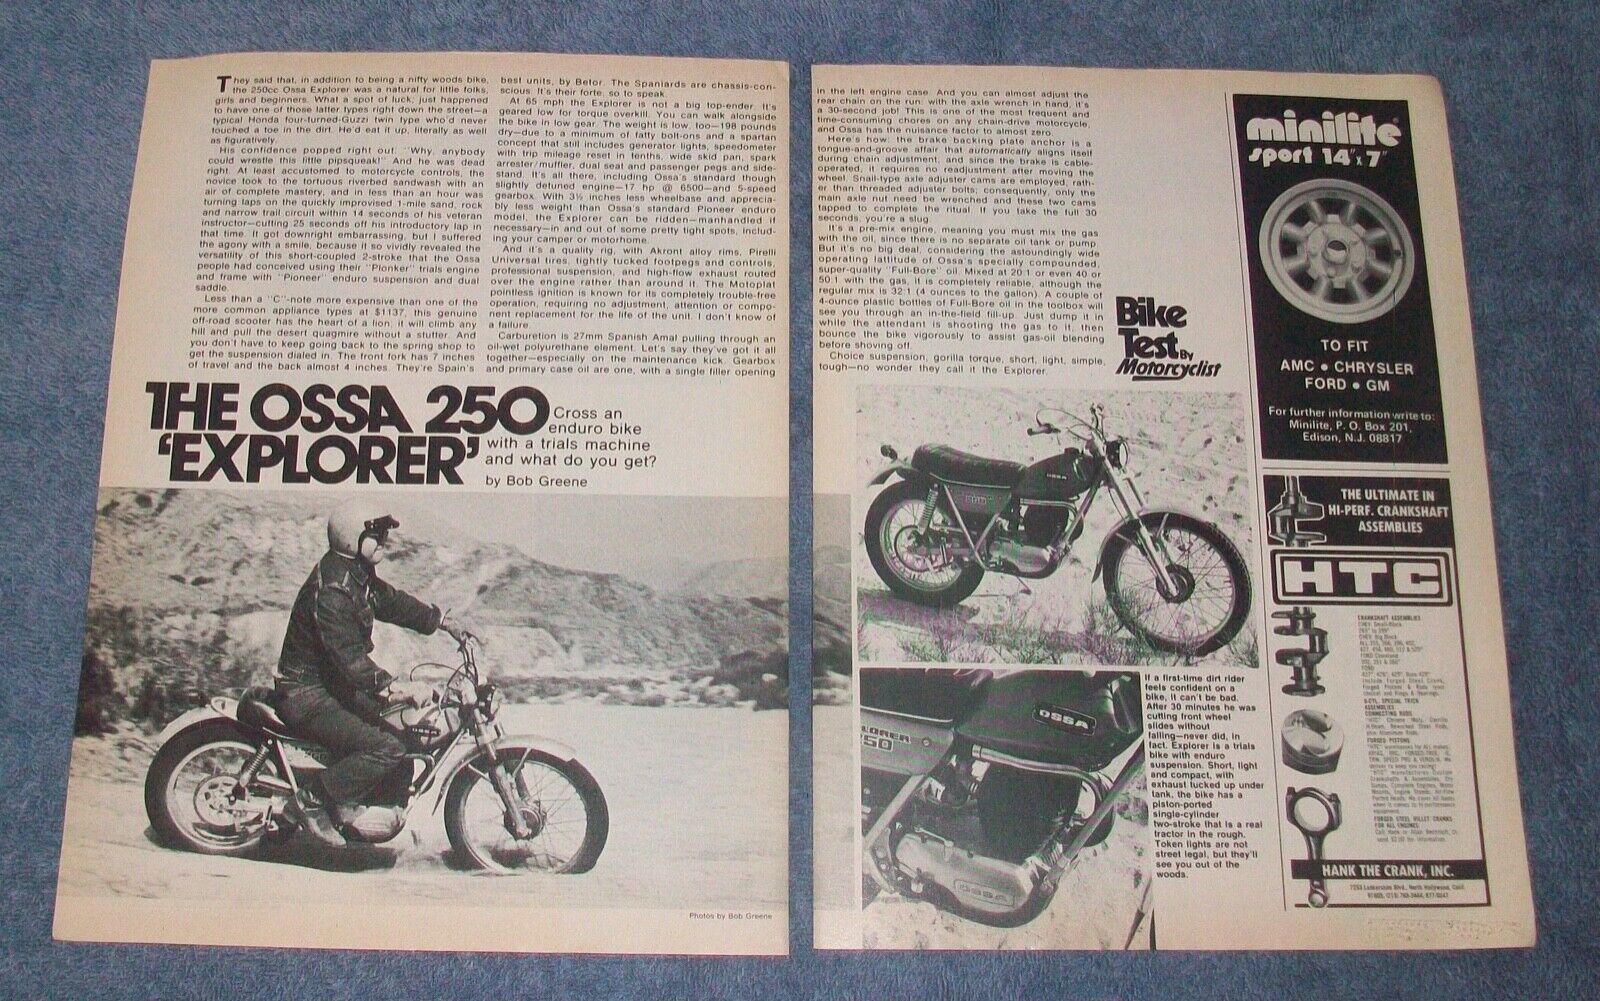 1974 Ossa 250 Explorer Vintage Motorcycle Info Article 